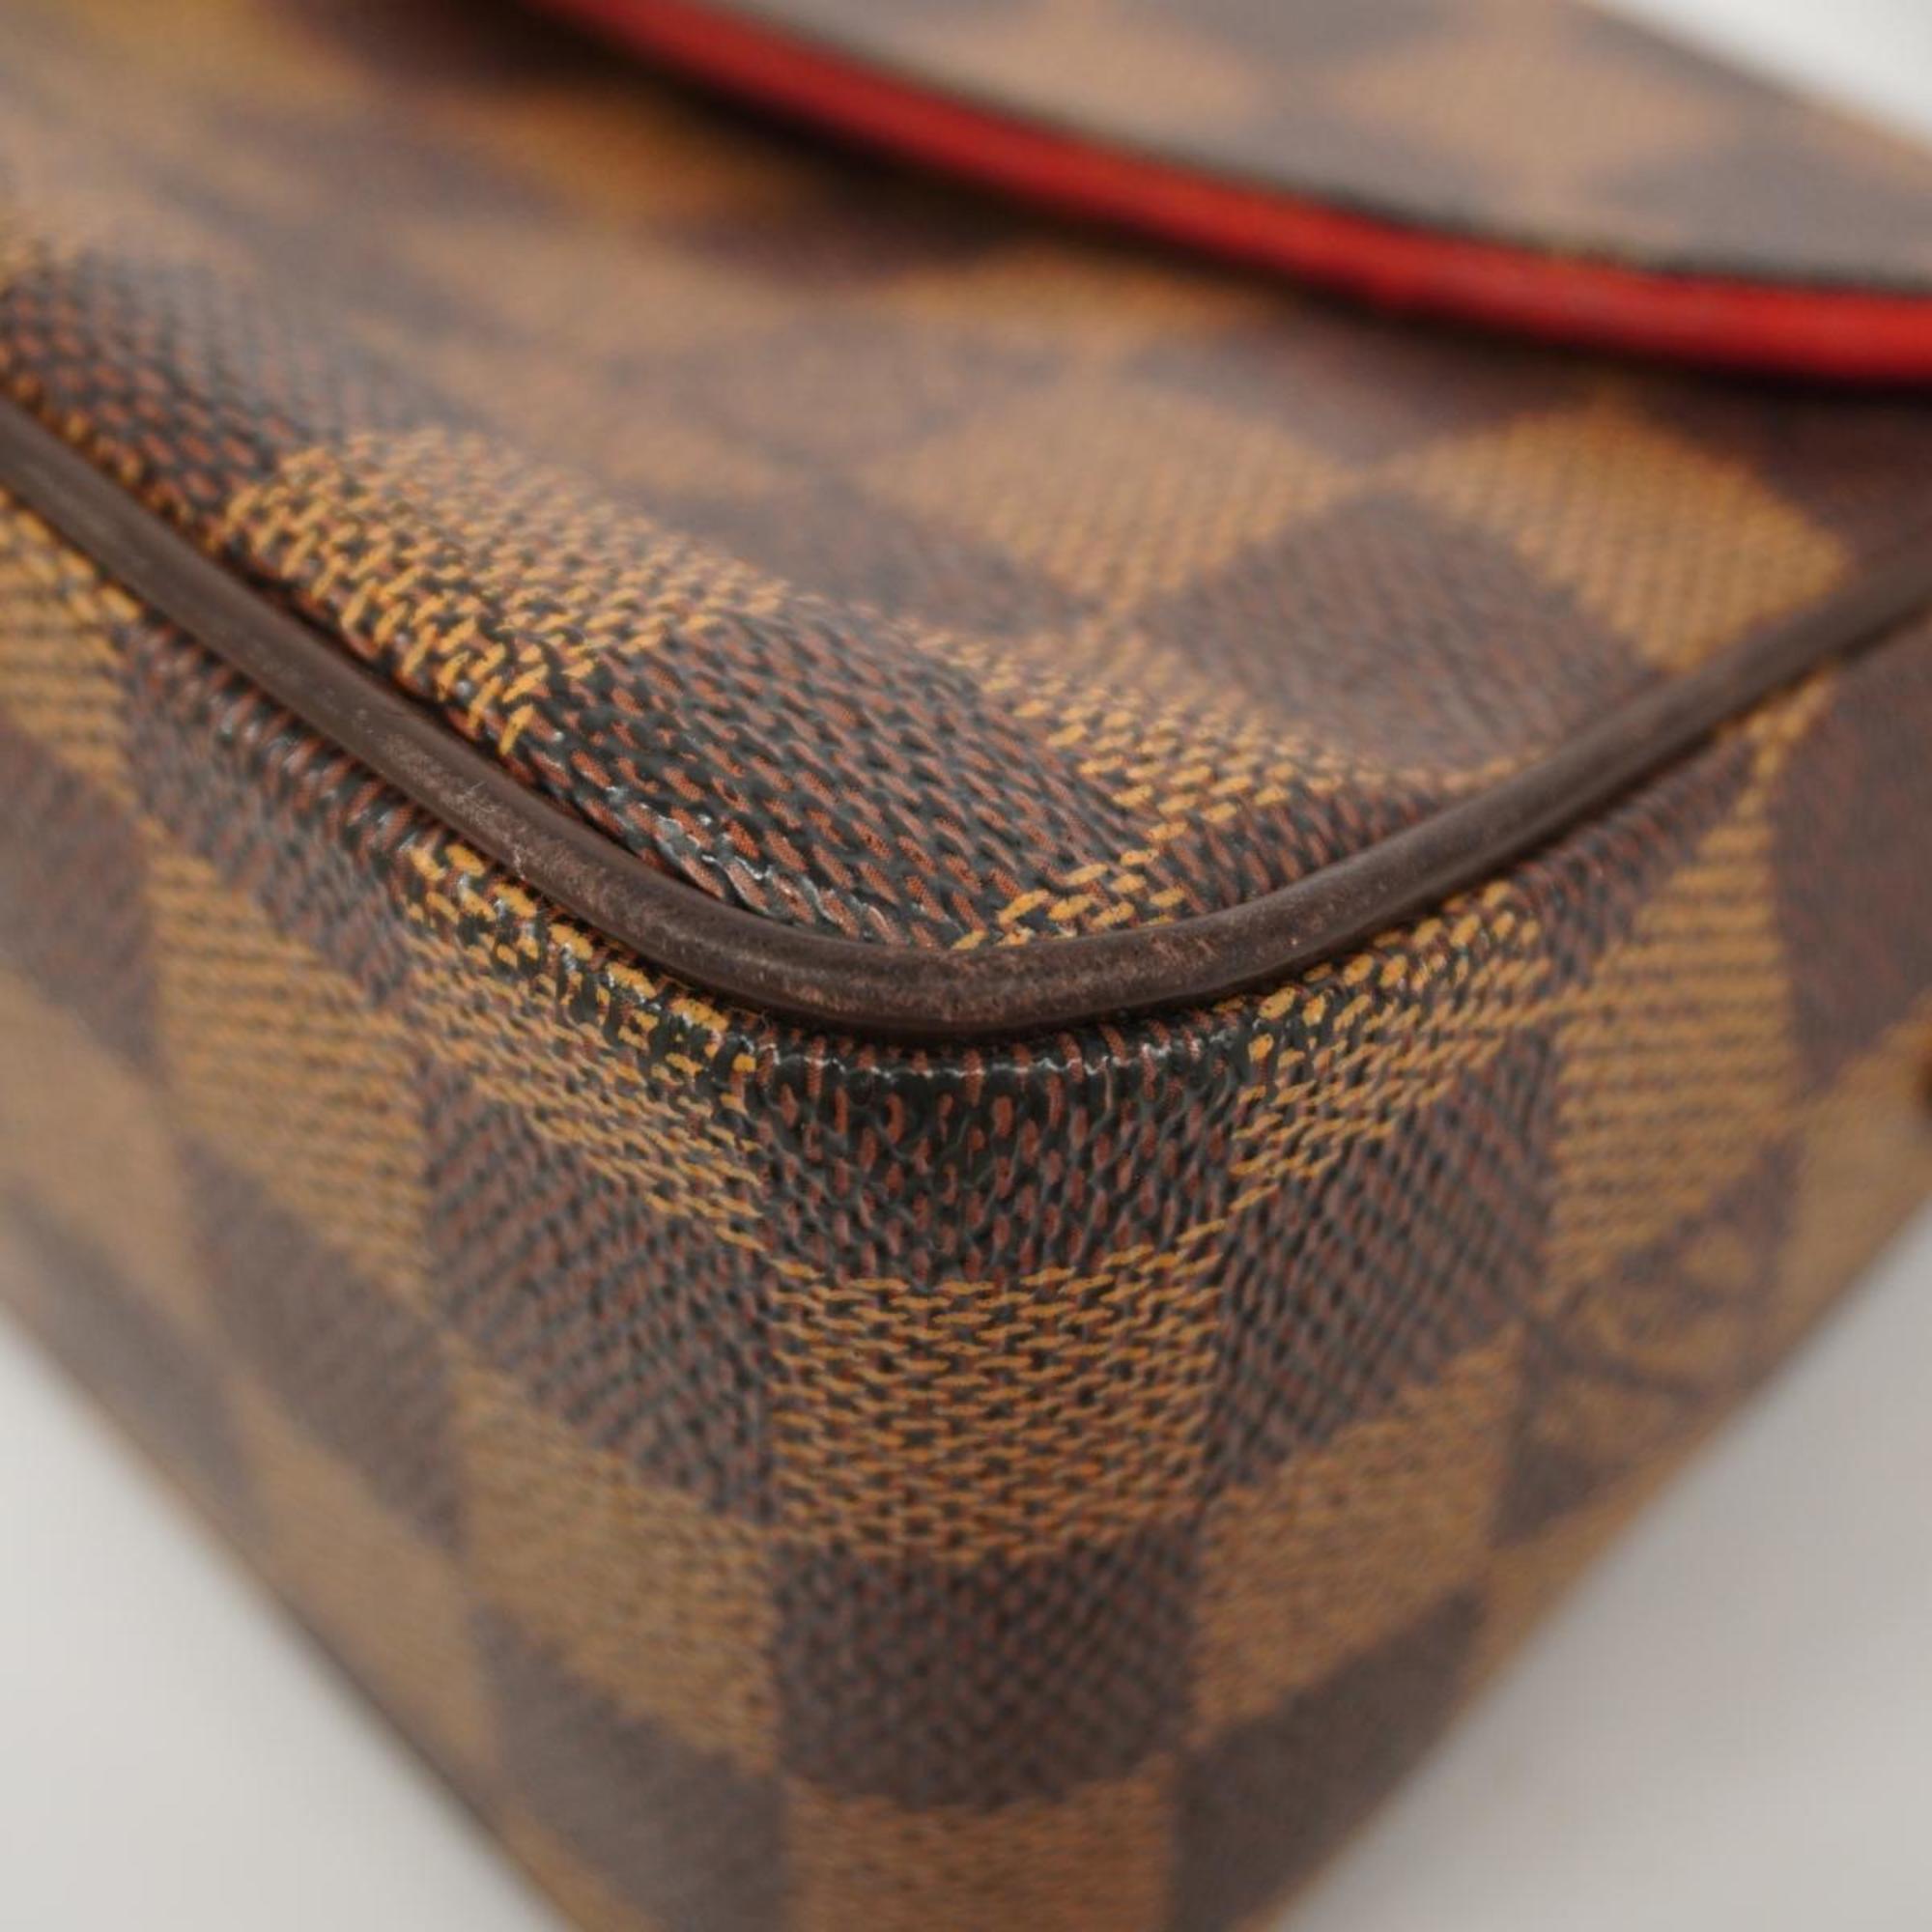 Louis Vuitton Shoulder Bag Damier Ravello PM N60007 Ebene Ladies